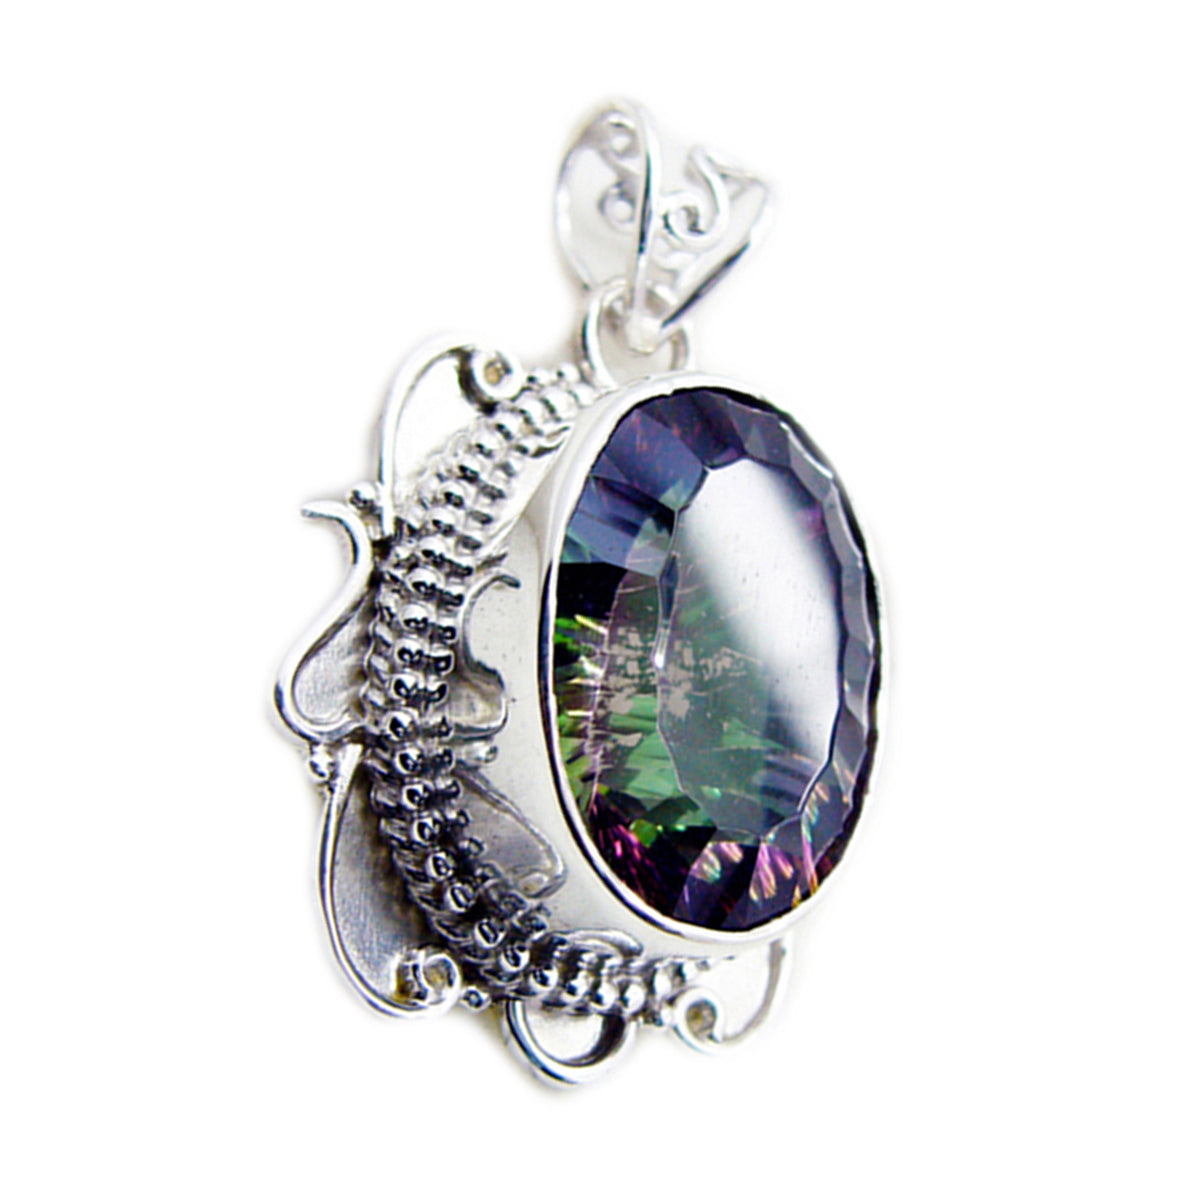 Riyo Aesthetic Gemstone Oval Faceted Multi Color Mystic Quartz Sterling Silver Pendant Gift For Women